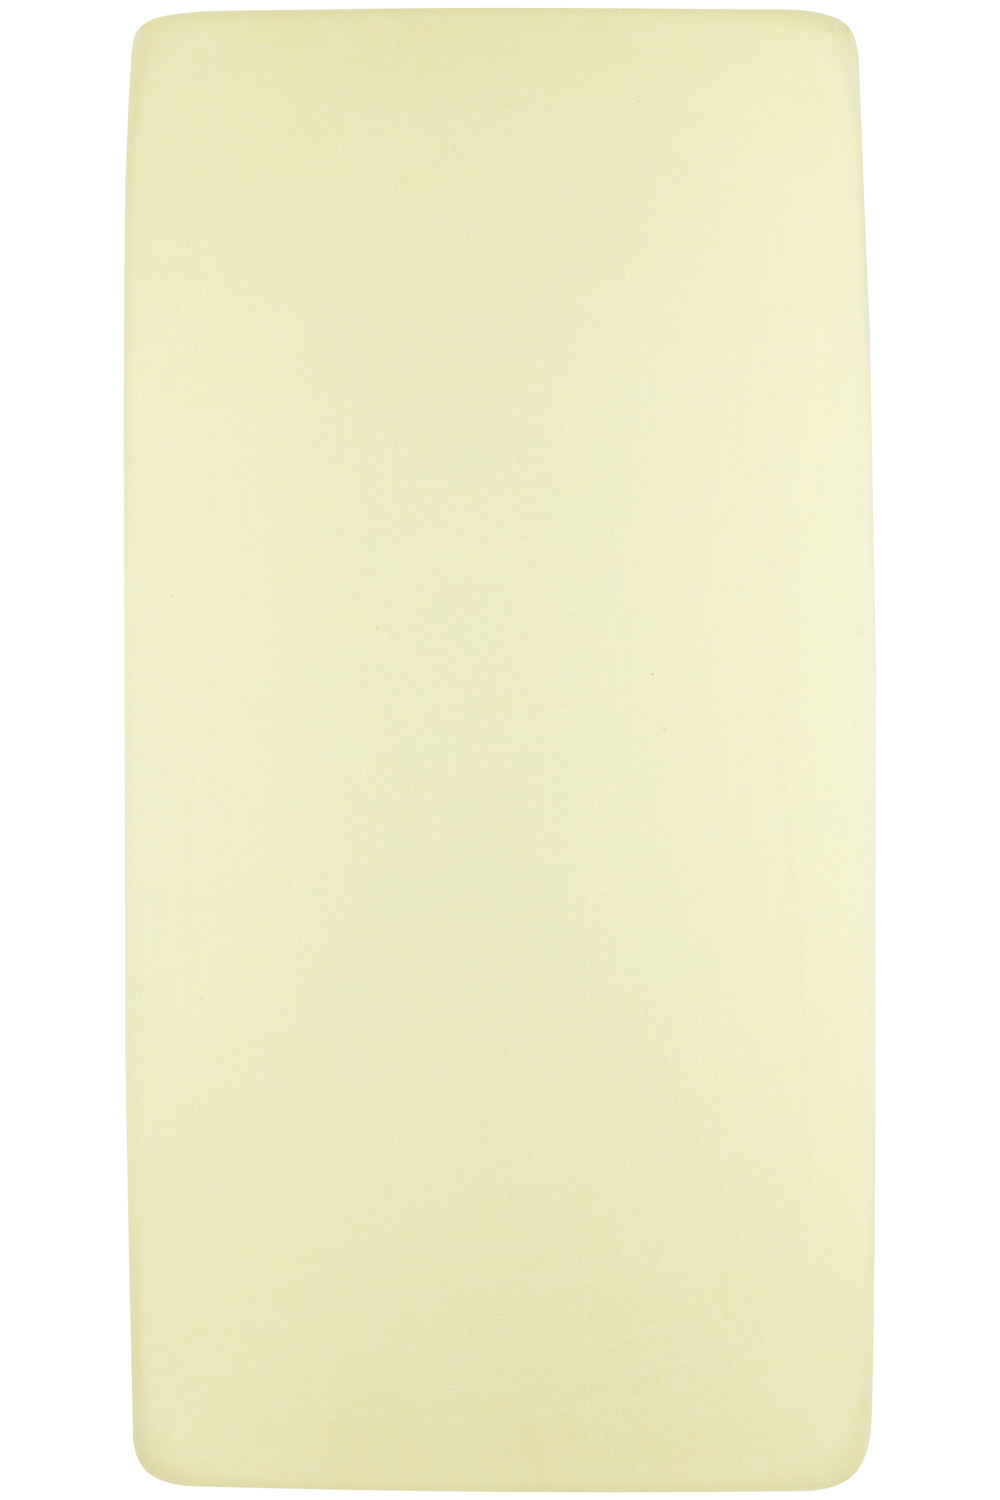 Jersey Spannbettlaken - Soft Yellow - 40x80/90cm